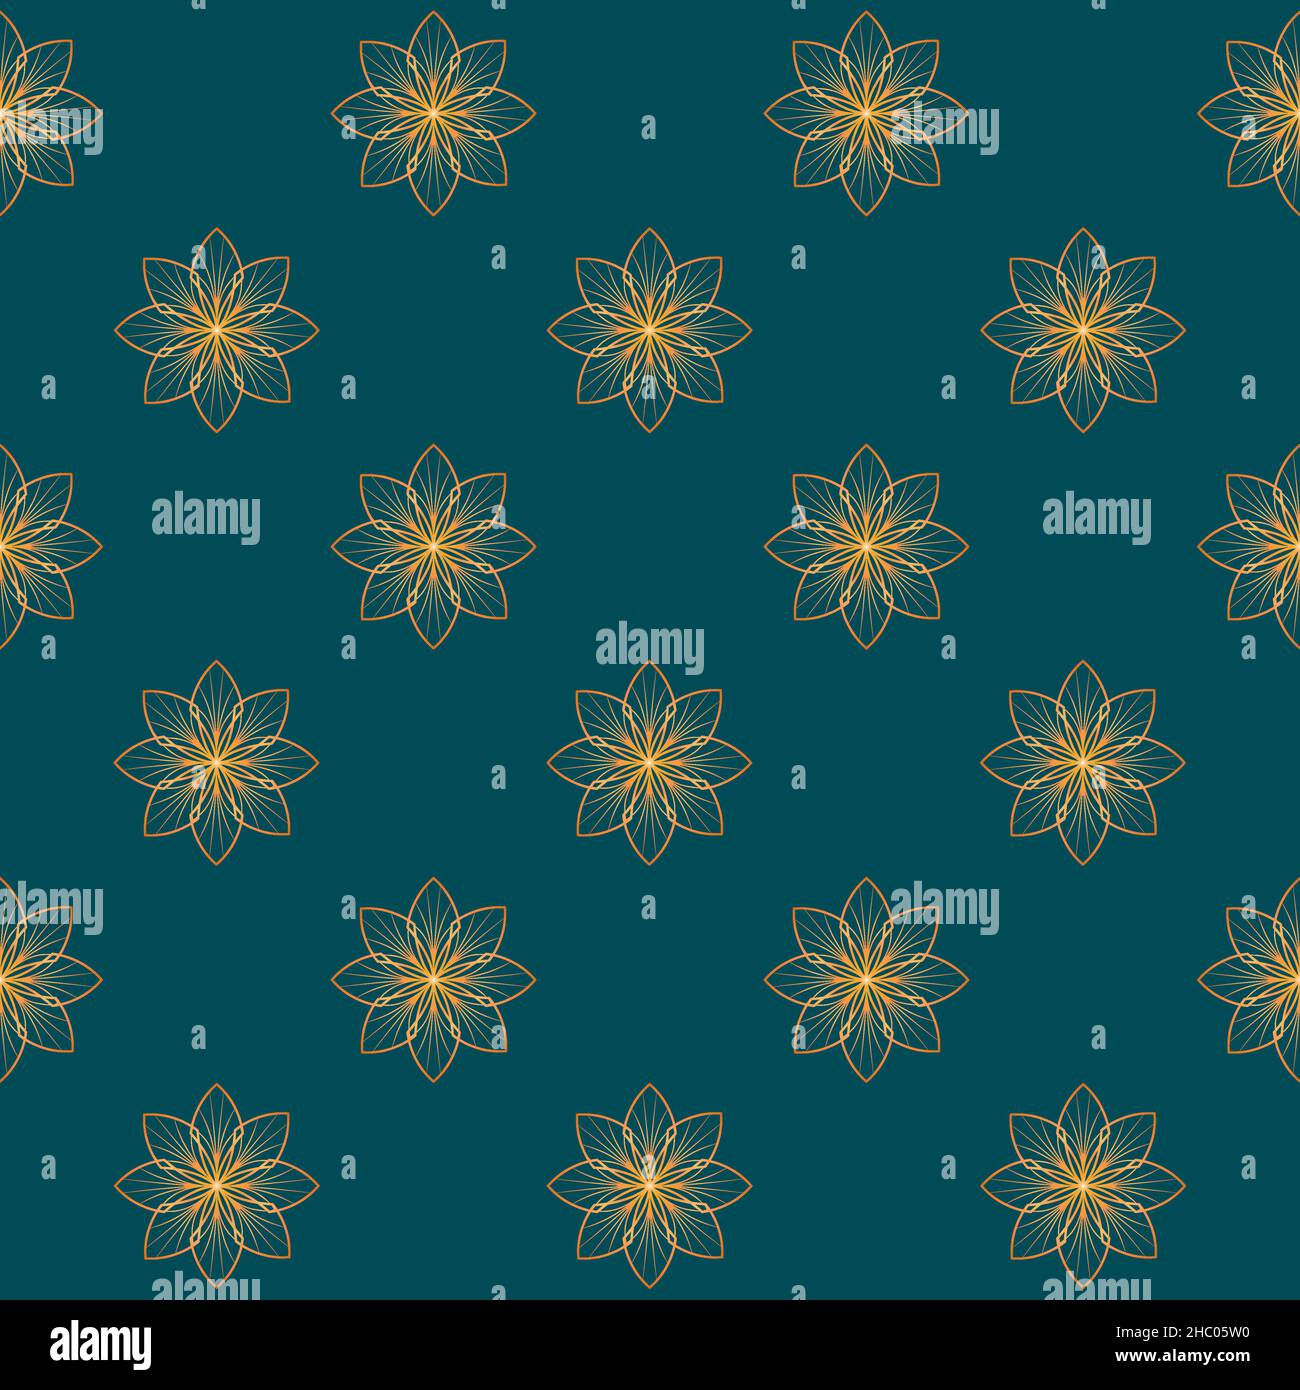 Seamless vector pattern of golden geometric stars on dark blue background in Arabic style Stock Vector